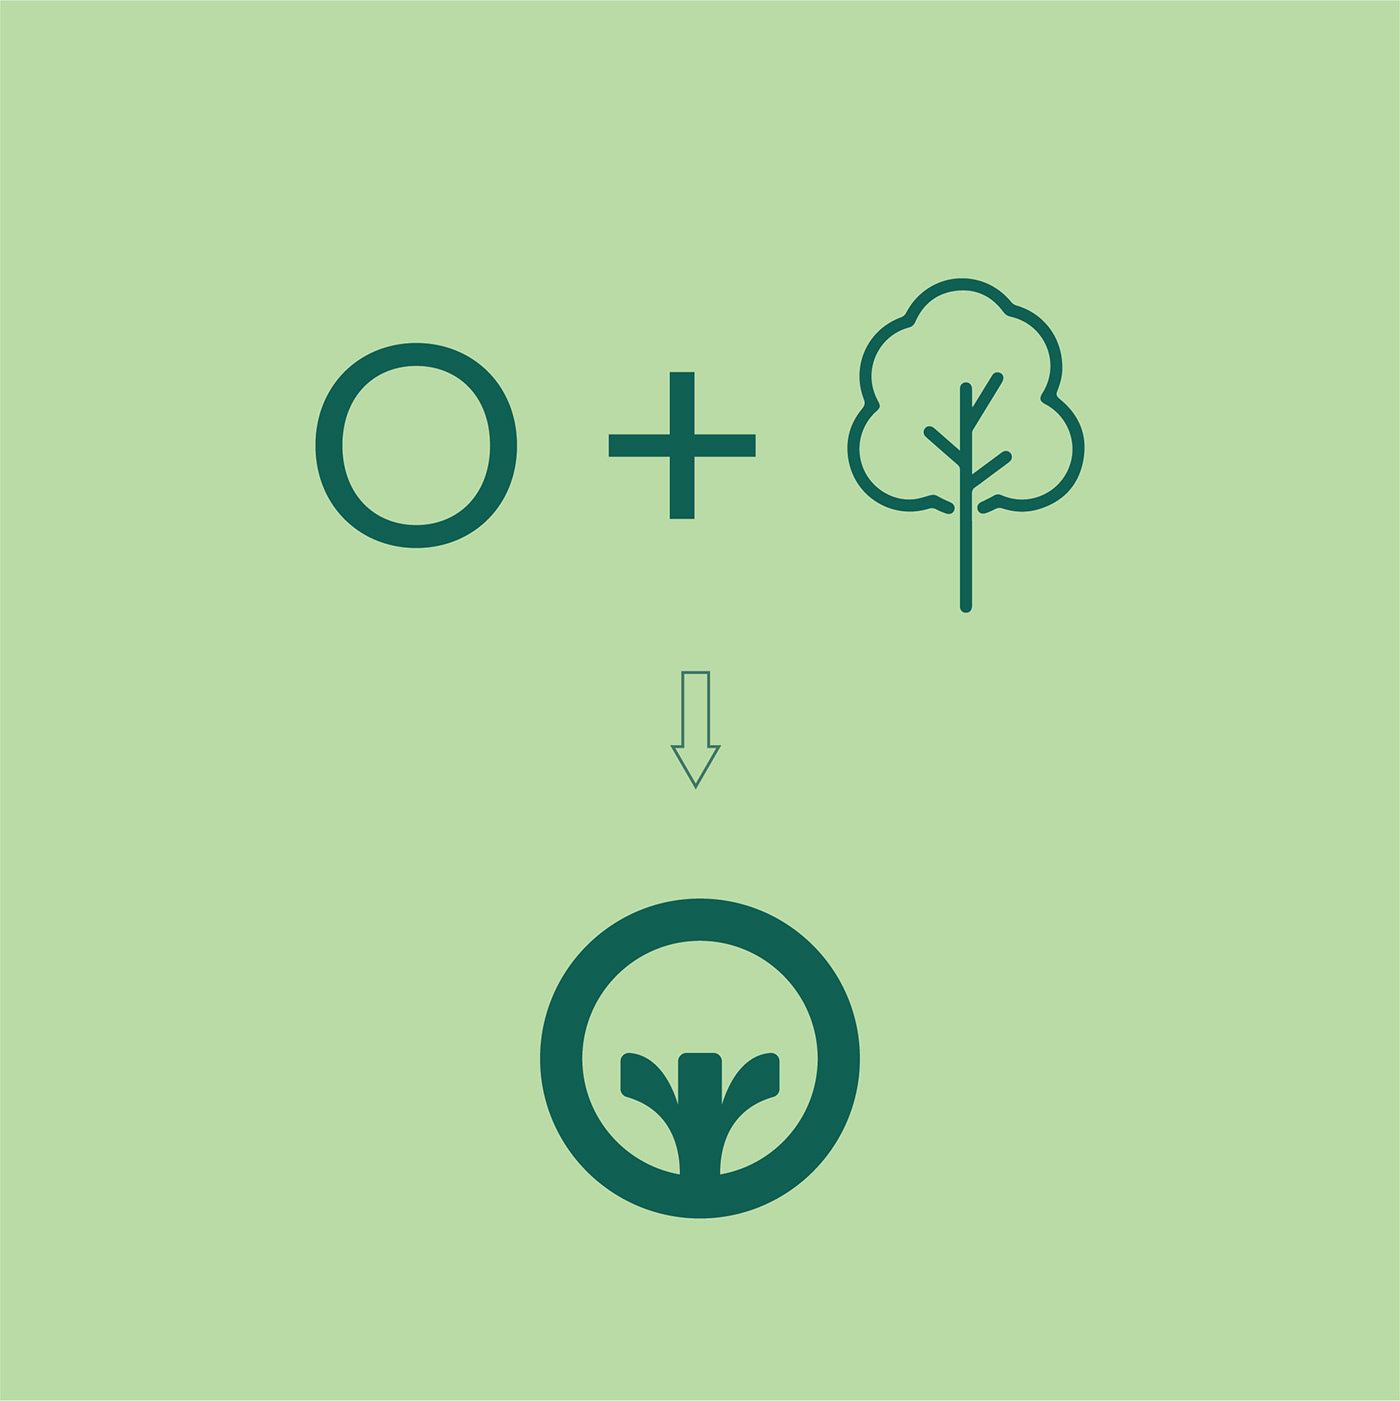 Organic logo, Natural logo, agriculture , pesticide, biotic